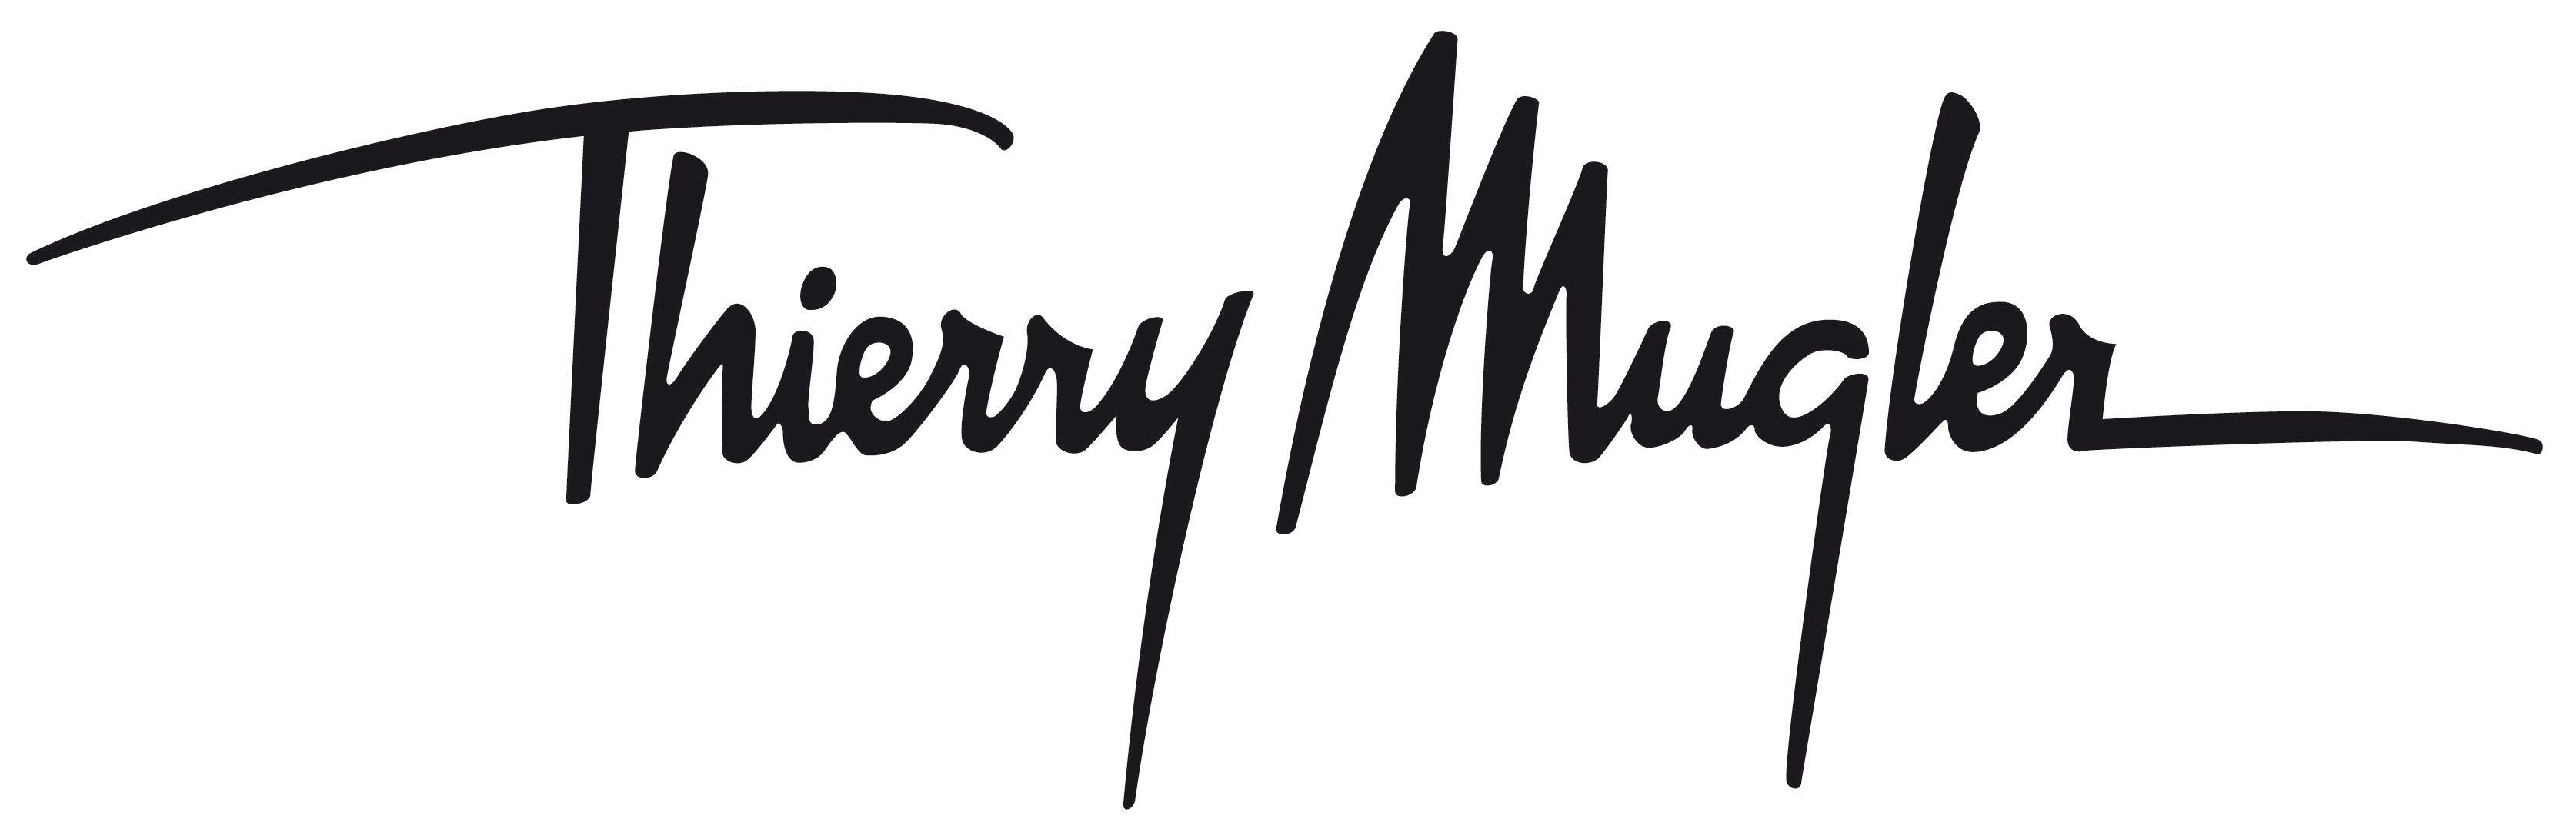 Thierry Mugler Logo - Thierry Mugler logo | RETAIL THERAPY | Pinterest | Thierry mugler ...